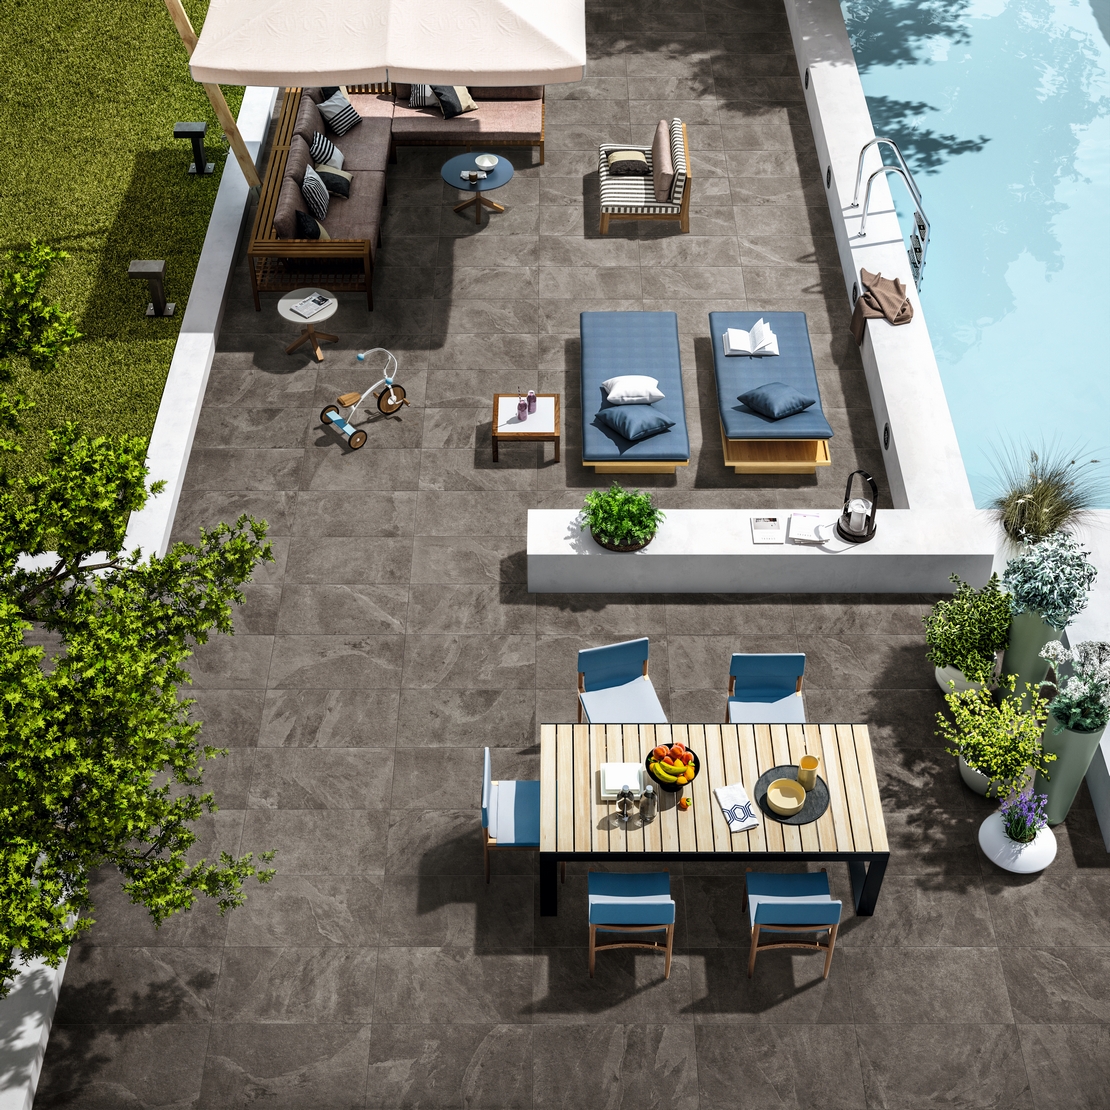 Terrasse moderne avec piscine, sol imitation pierre noire et tons bleus. - Inspirations Iperceramica